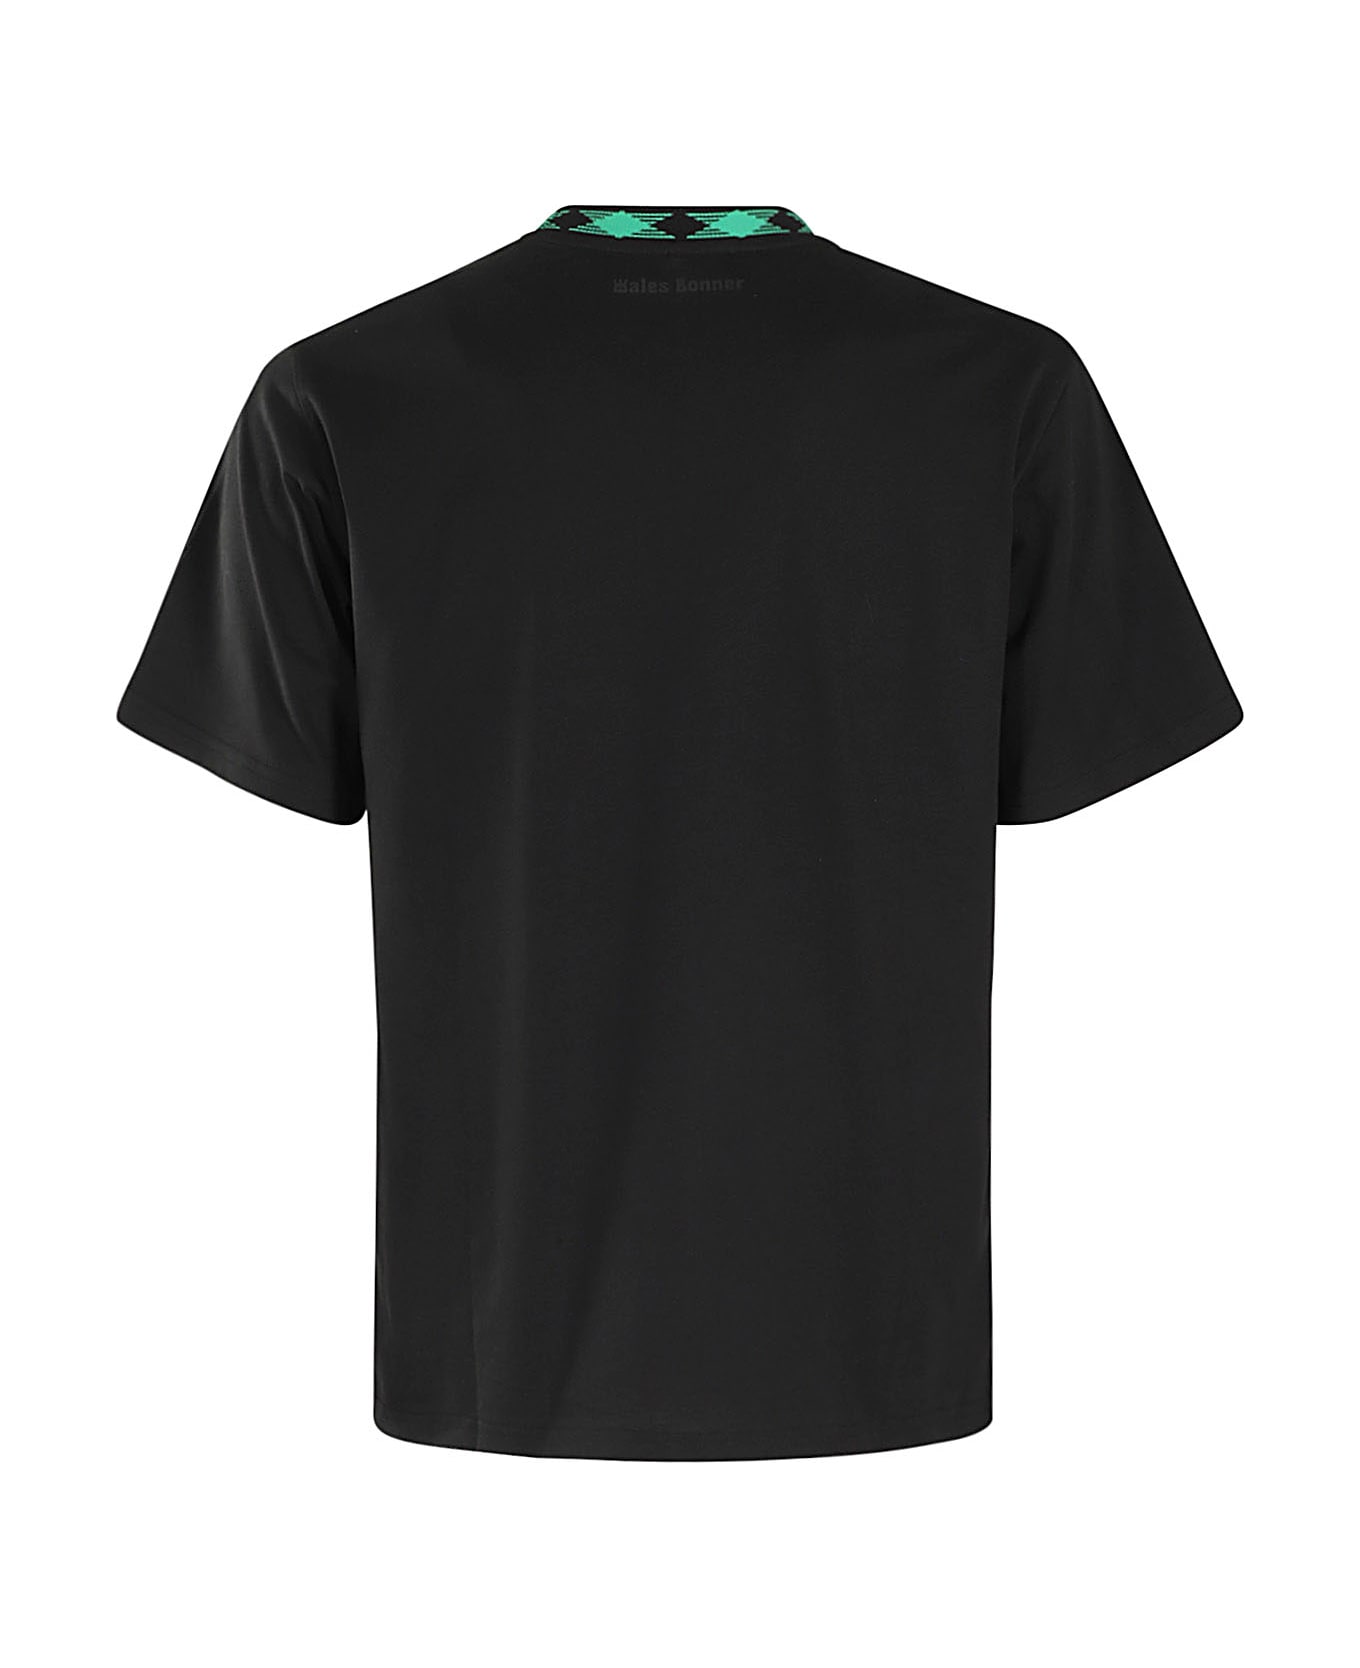 Wales Bonner Endurance T Shirt - Black シャツ